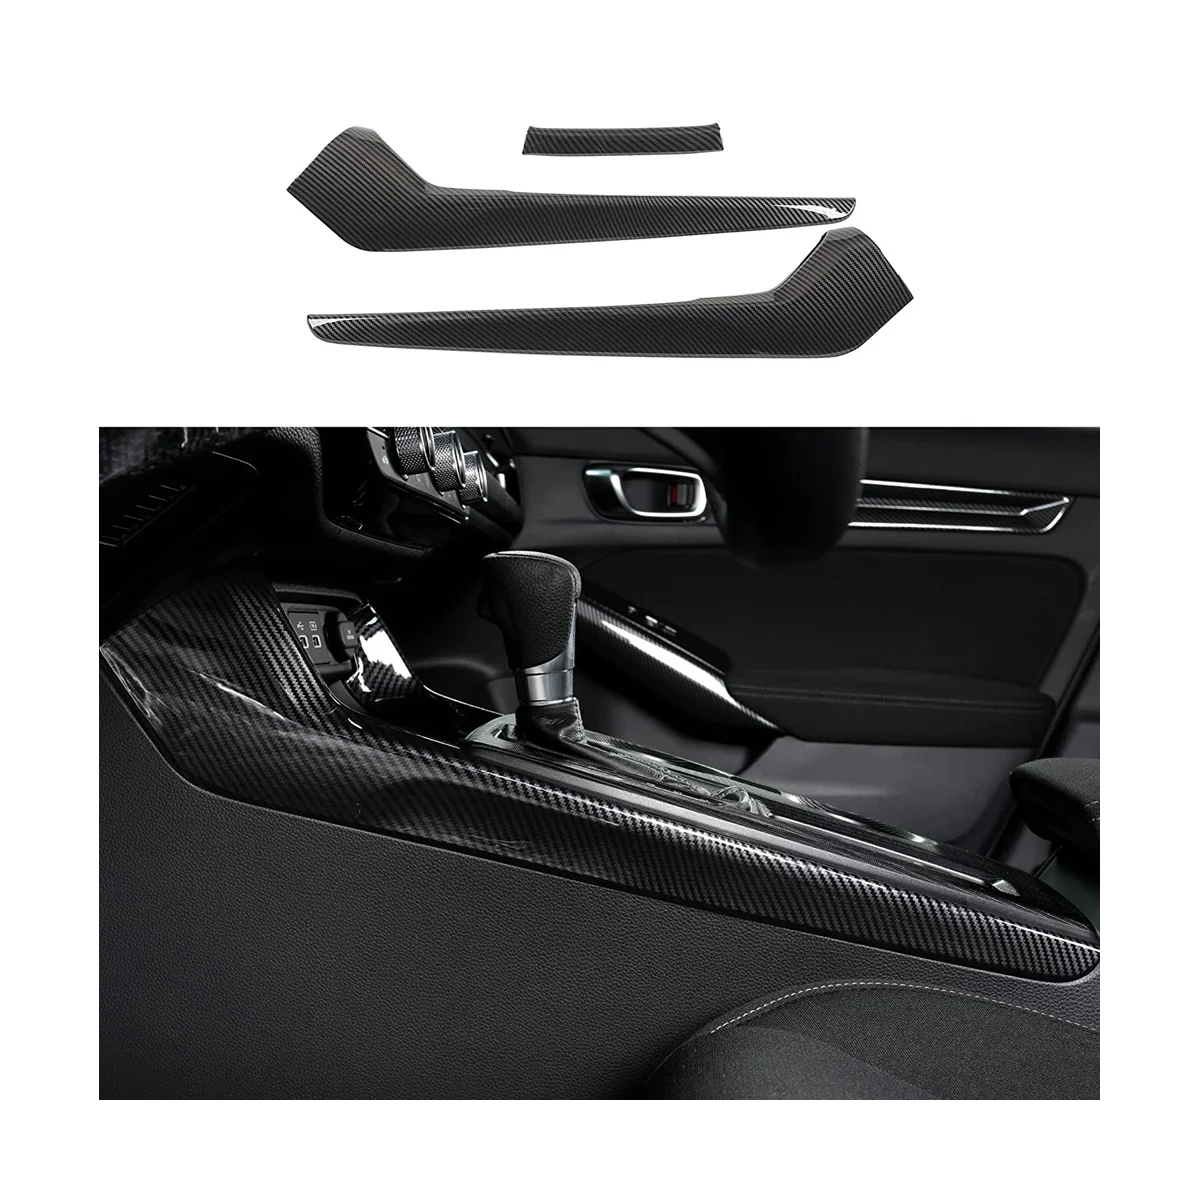 

Center Consoles Side Gear Shift Trims Decorative Cover for Honda Civic 11Th Gen 2022 2023 Accessories - ABS Carbon Fiber